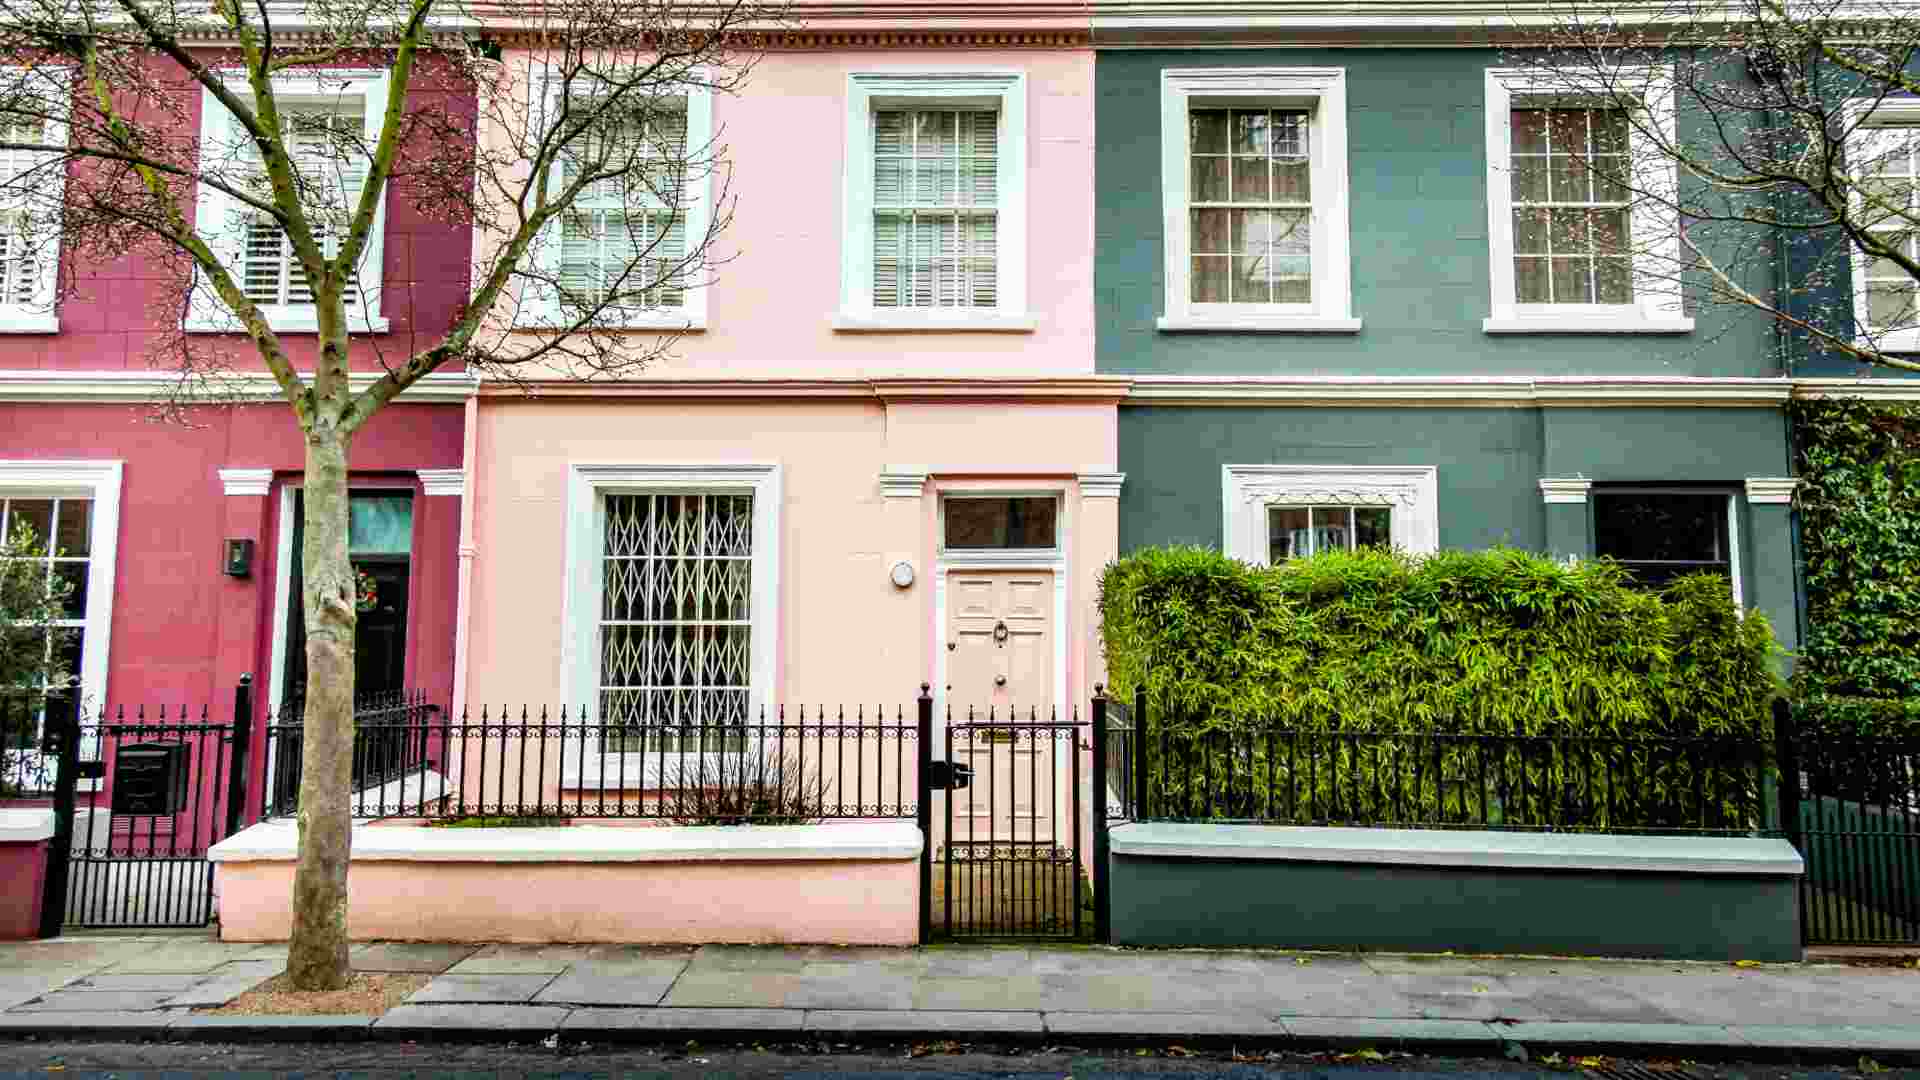 Colourful terrace houses on a London street